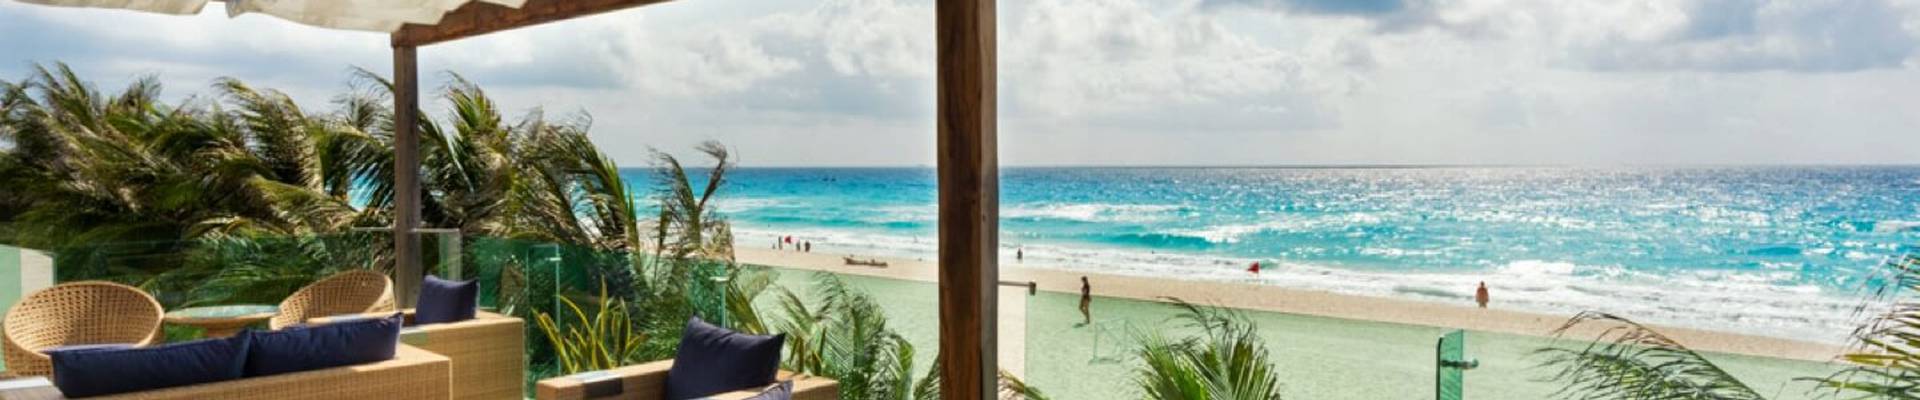 Flamingo Cancun Resort - Cancun - 